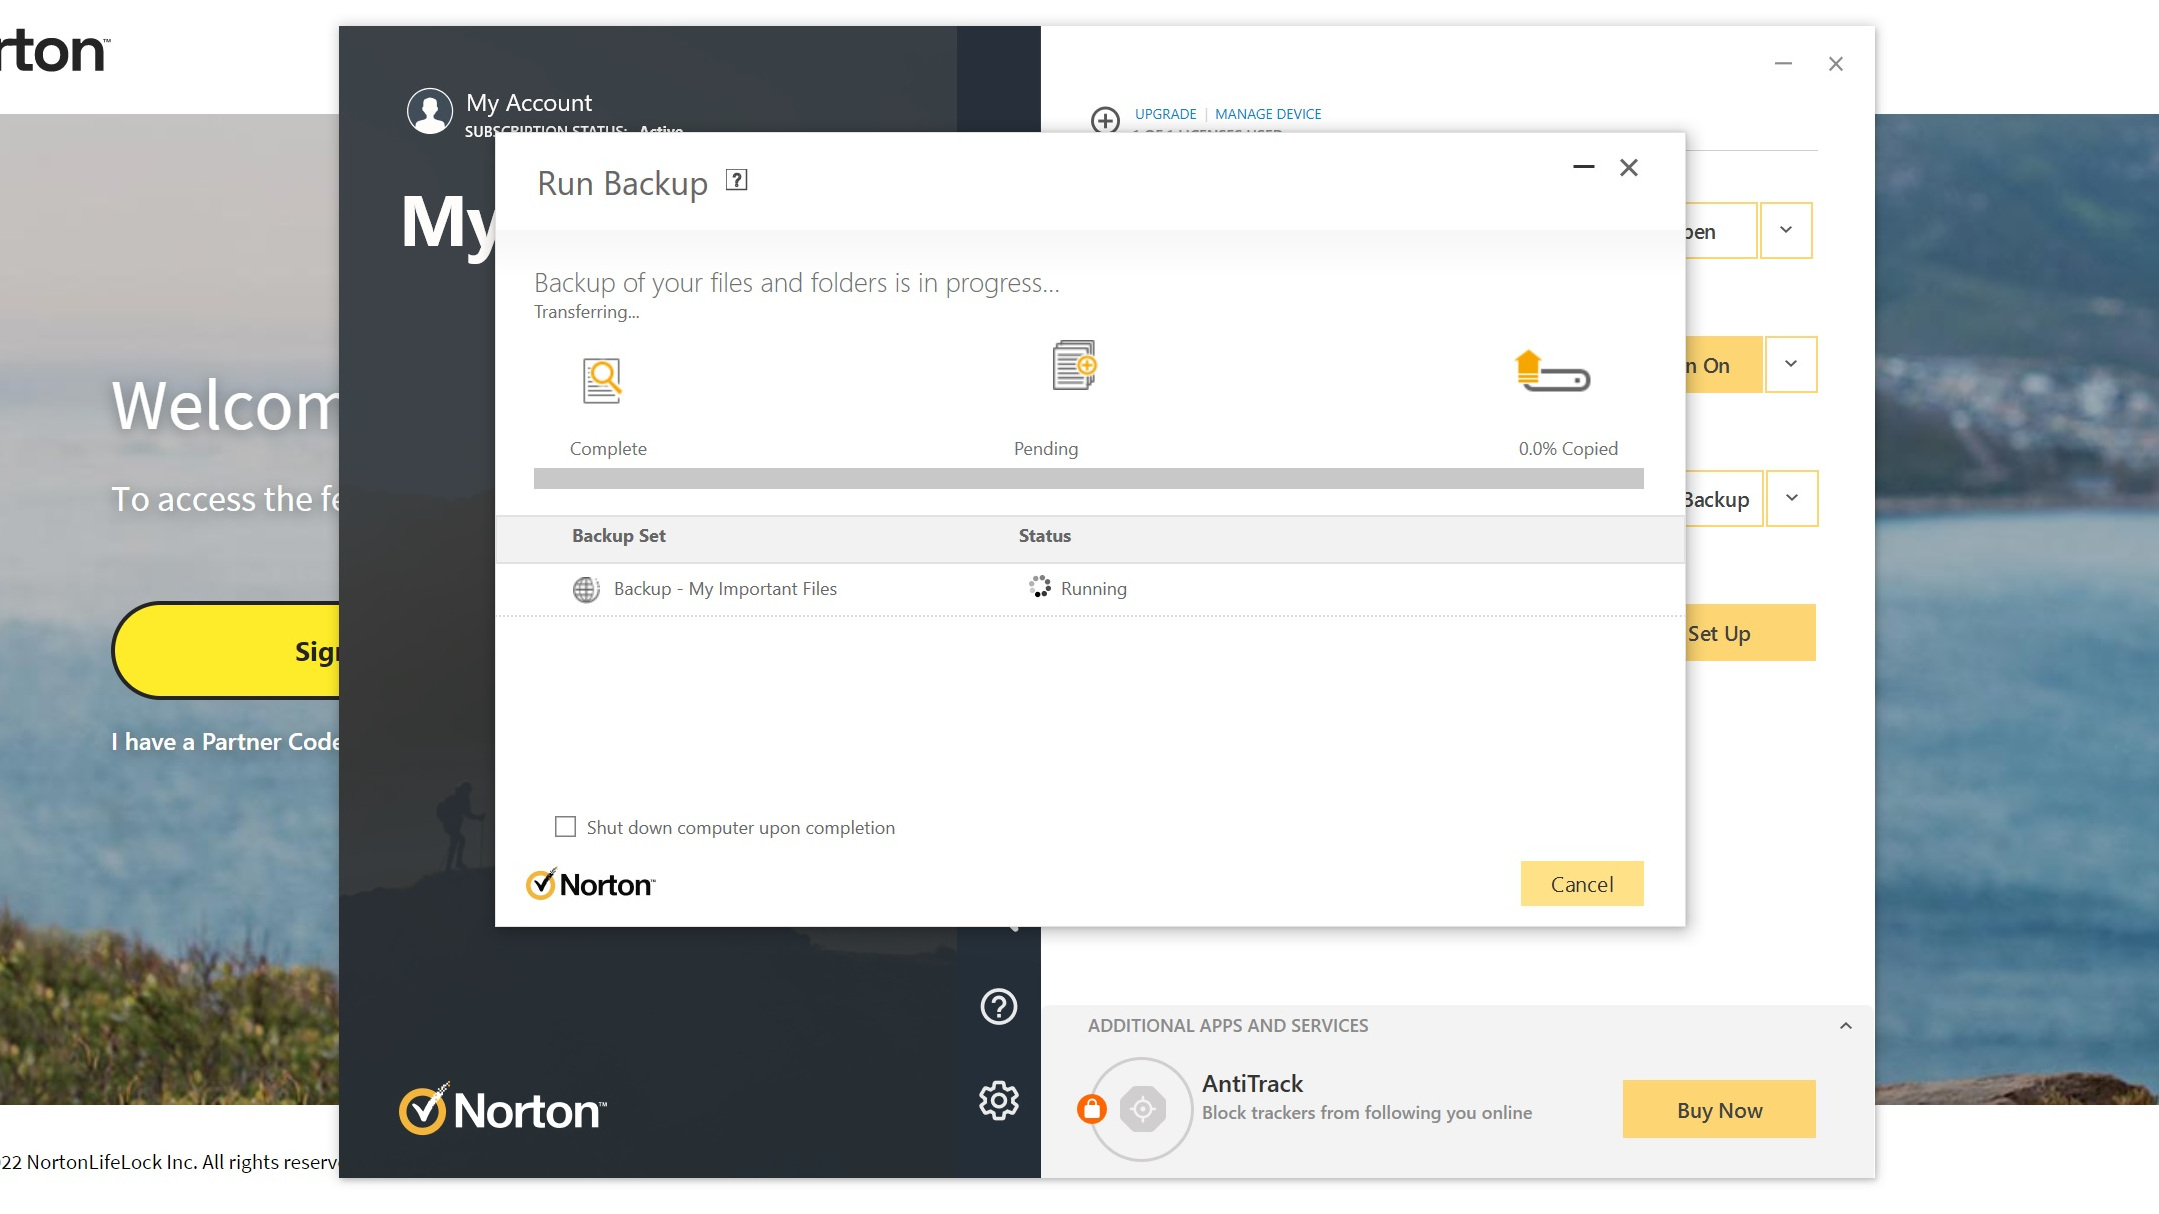 Cara menggunakan Norton Cloud Backup: Simpan konfigurasi dan jalankan cadangan Anda